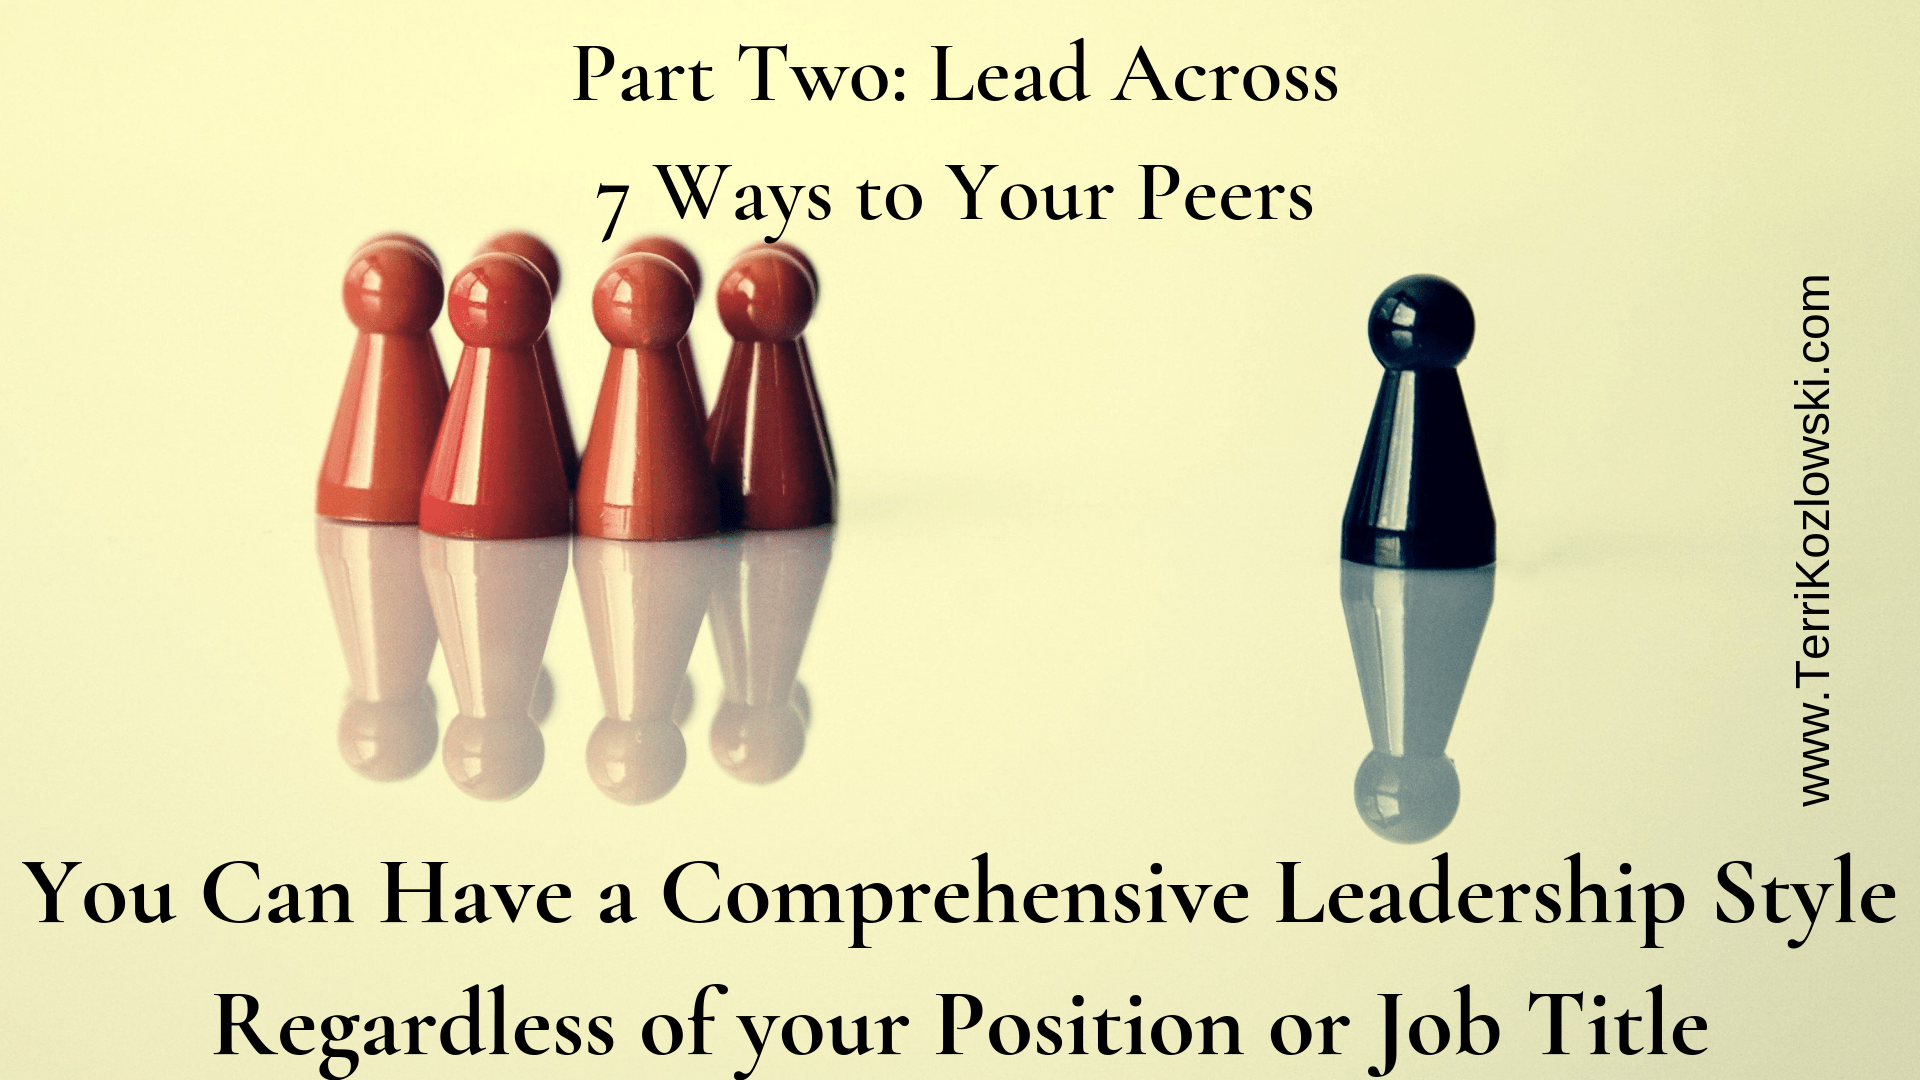 7 Ways to Lead Across